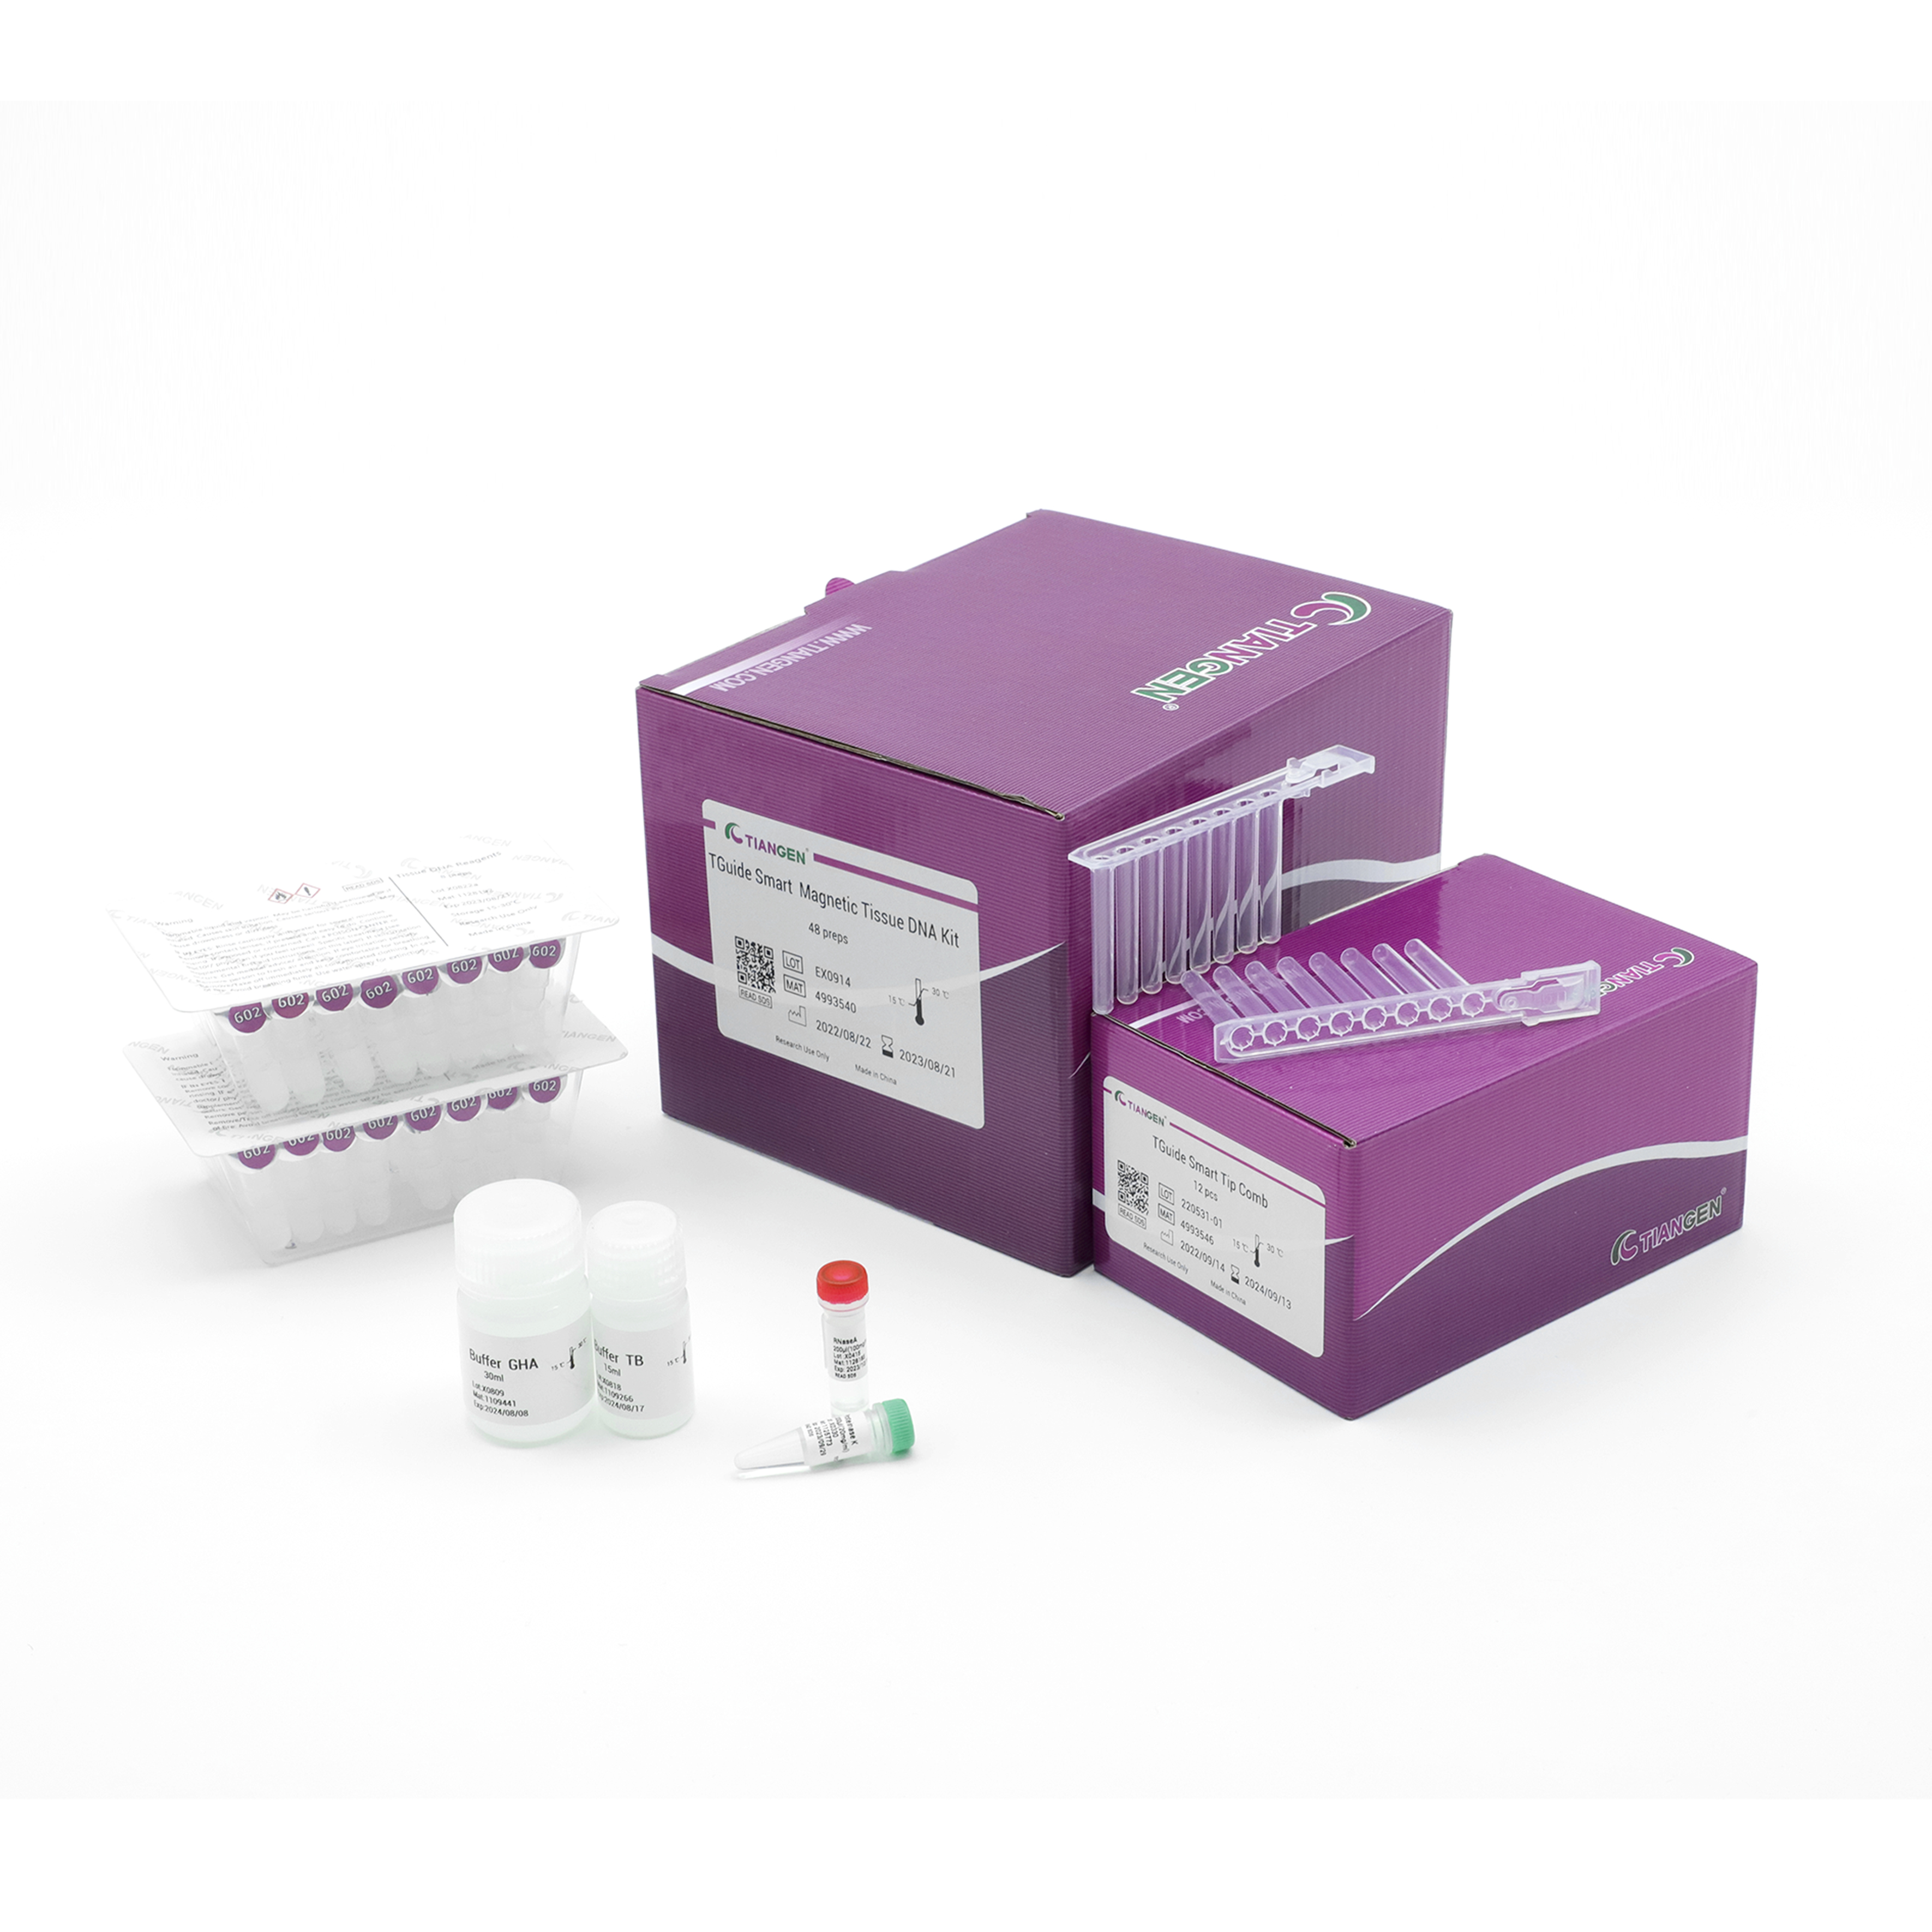 TGuide Smart Magnetic Tissue DNA Kit